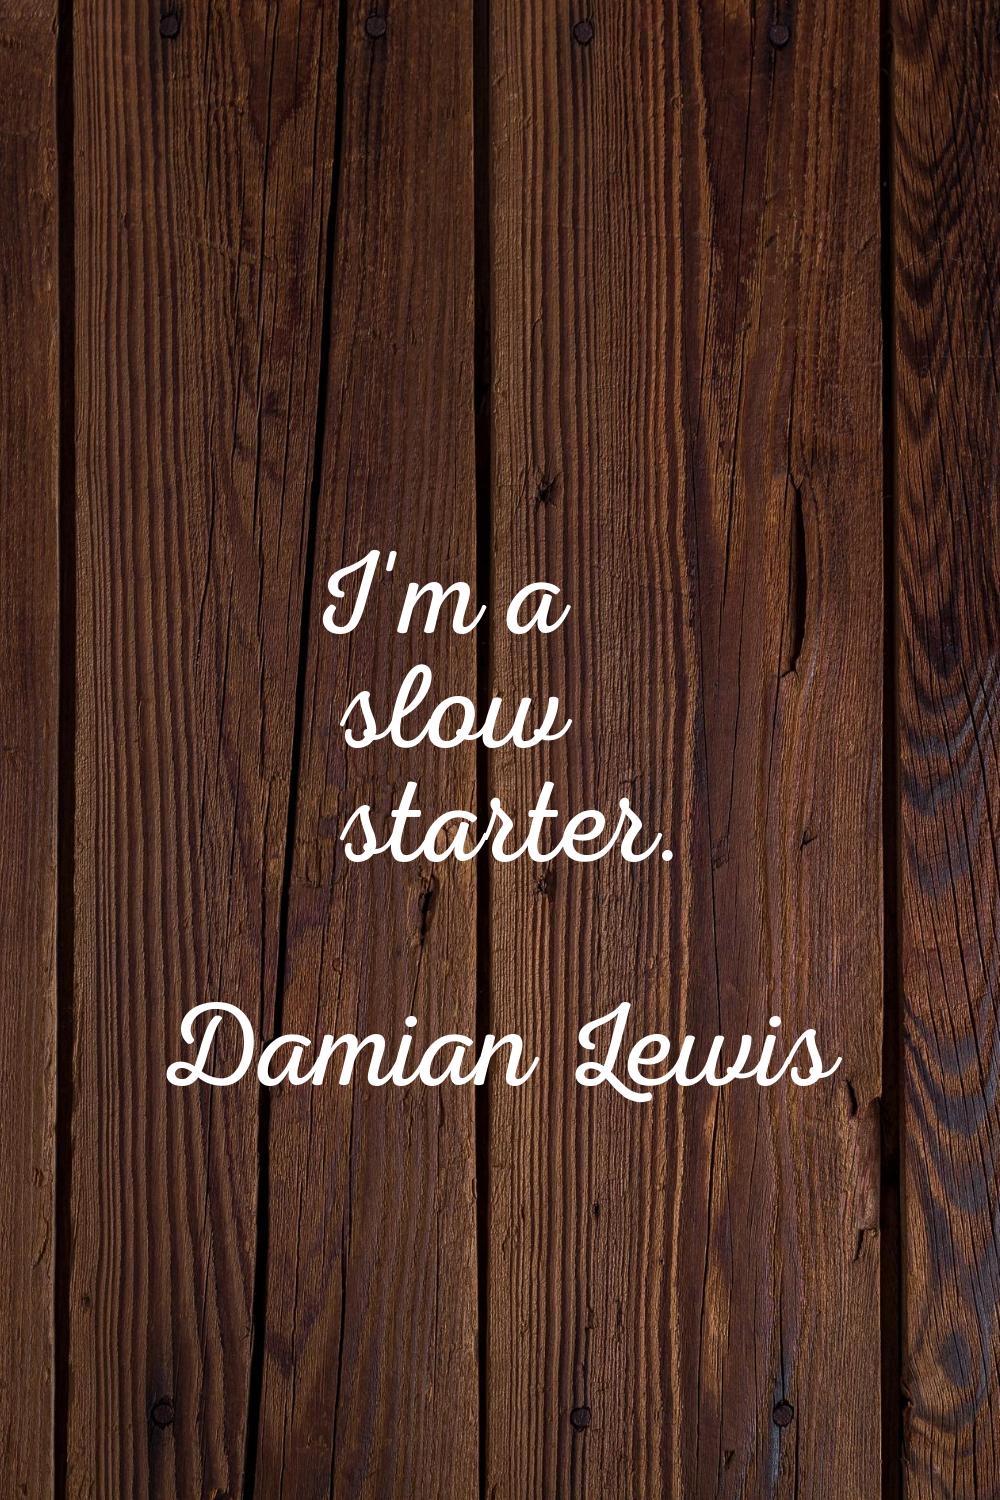 I'm a slow starter.